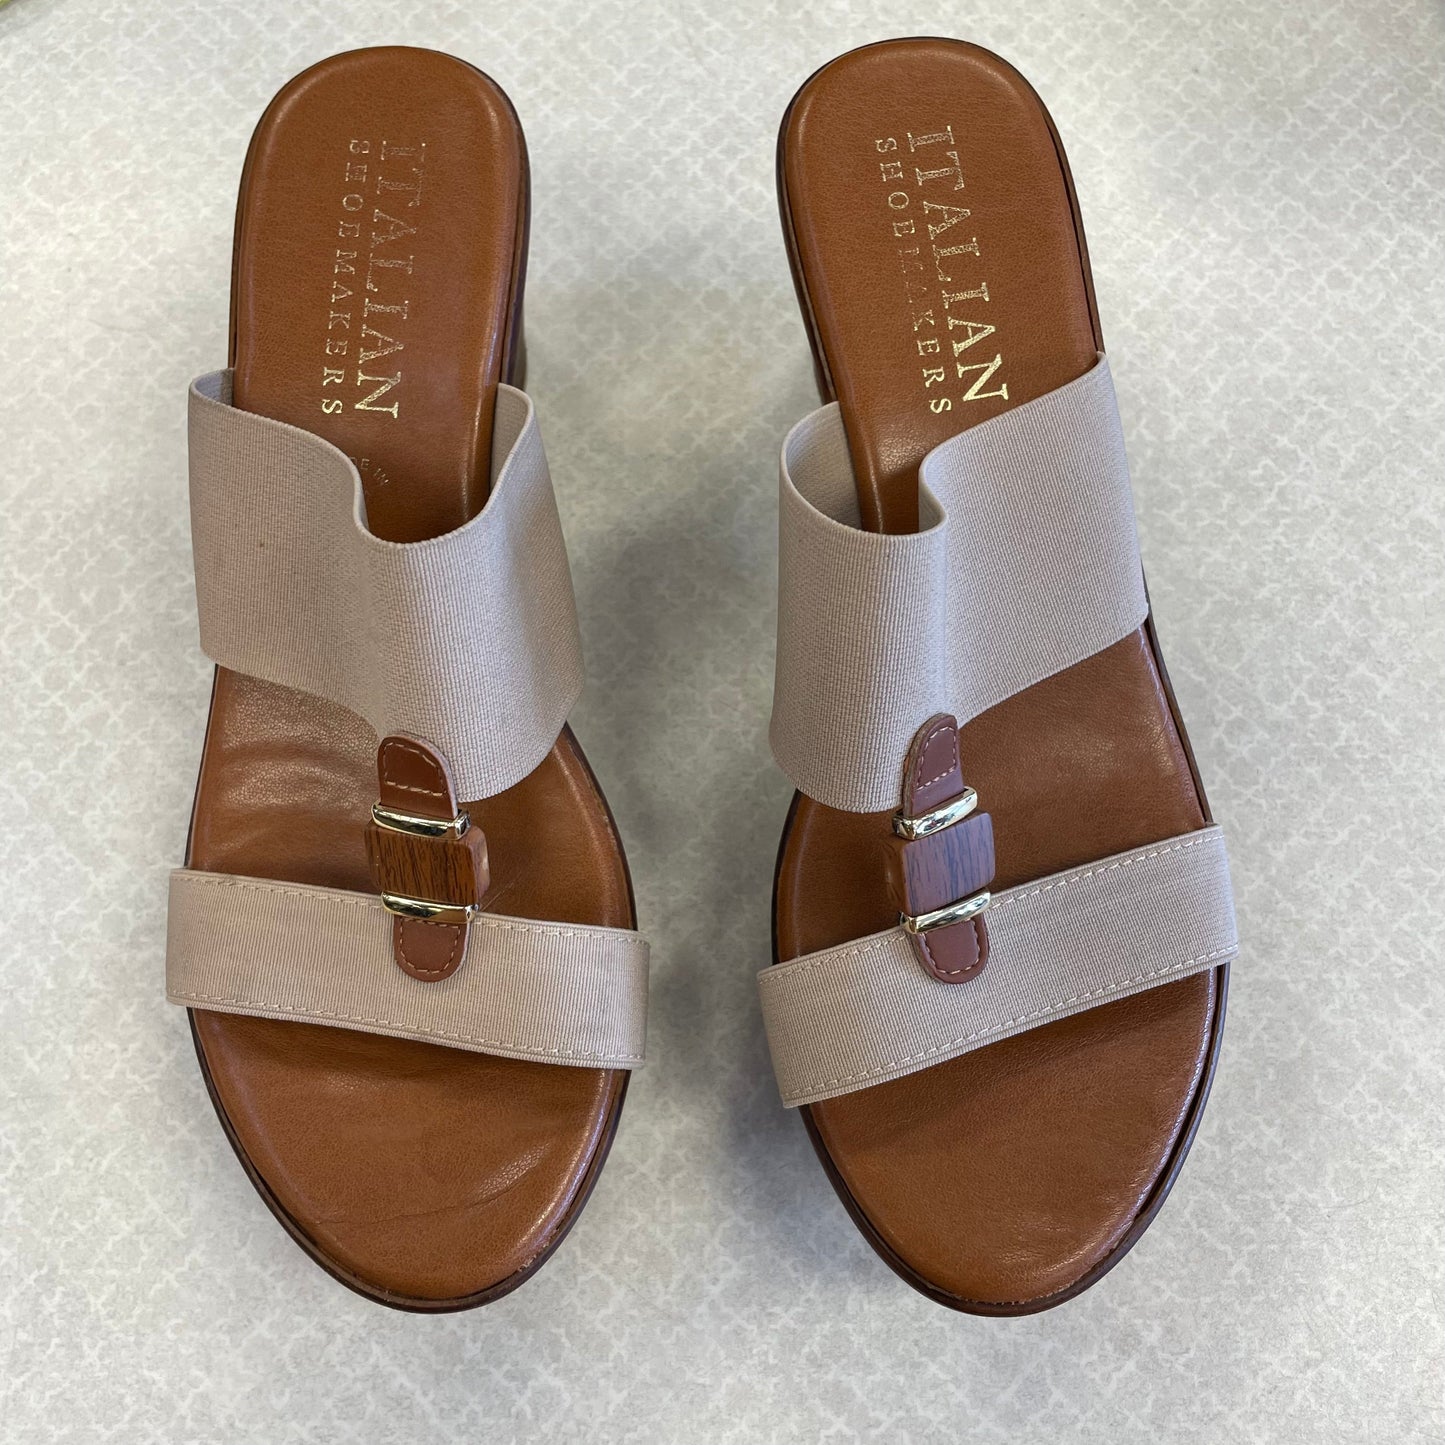 Brown & Tan Sandals Heels Wedge Italian Shoemakers, Size 8.5